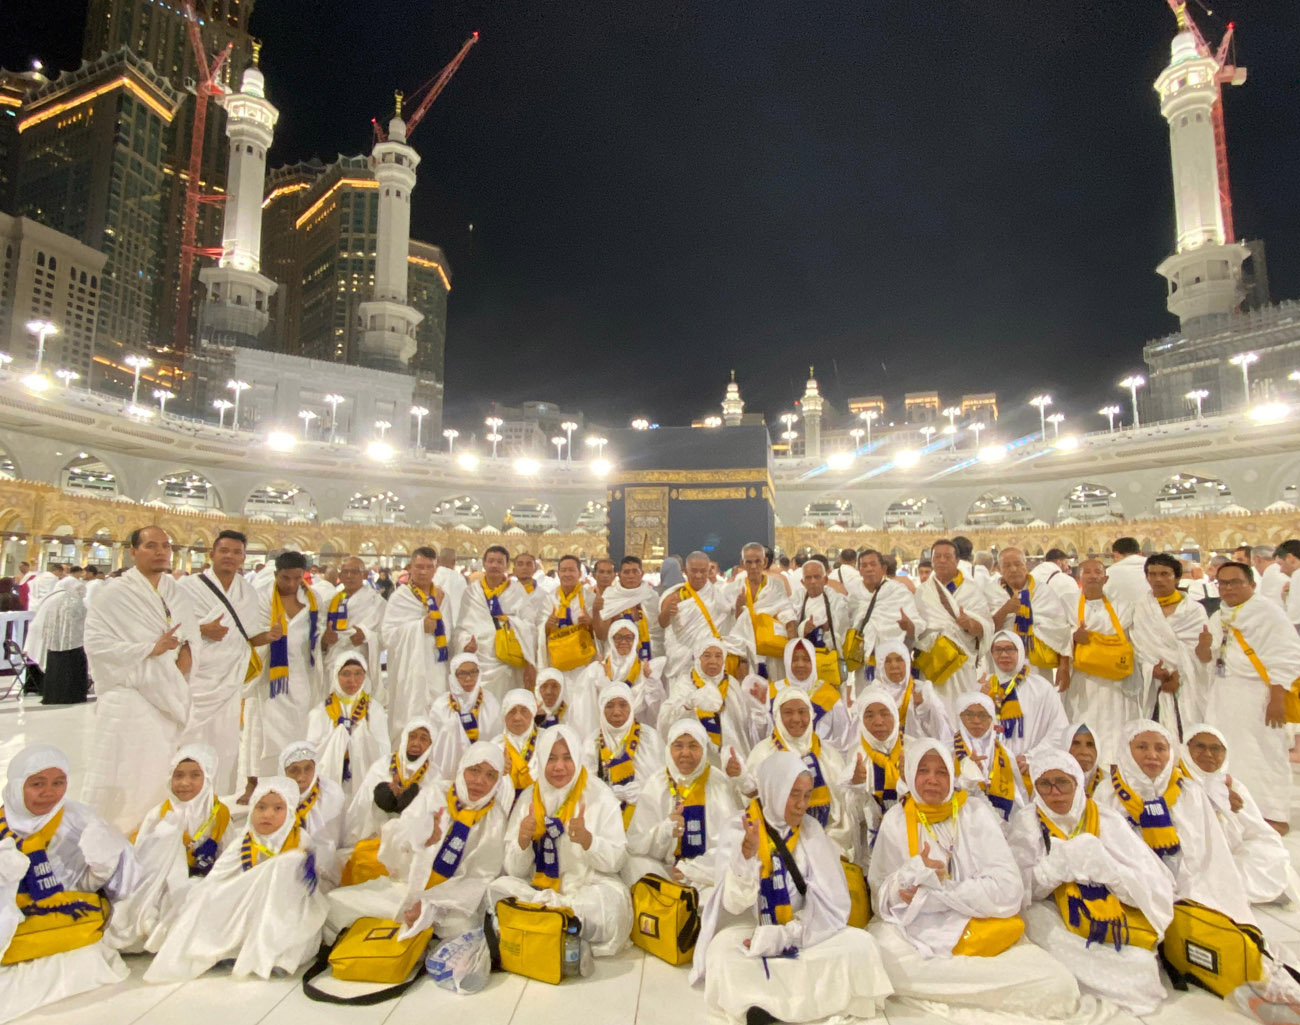 Kabar Umroh dari Ustadz Parendra, 48 Jamaah Travel Baba Tour Sudah Berada di Makkah Al Mukaramah